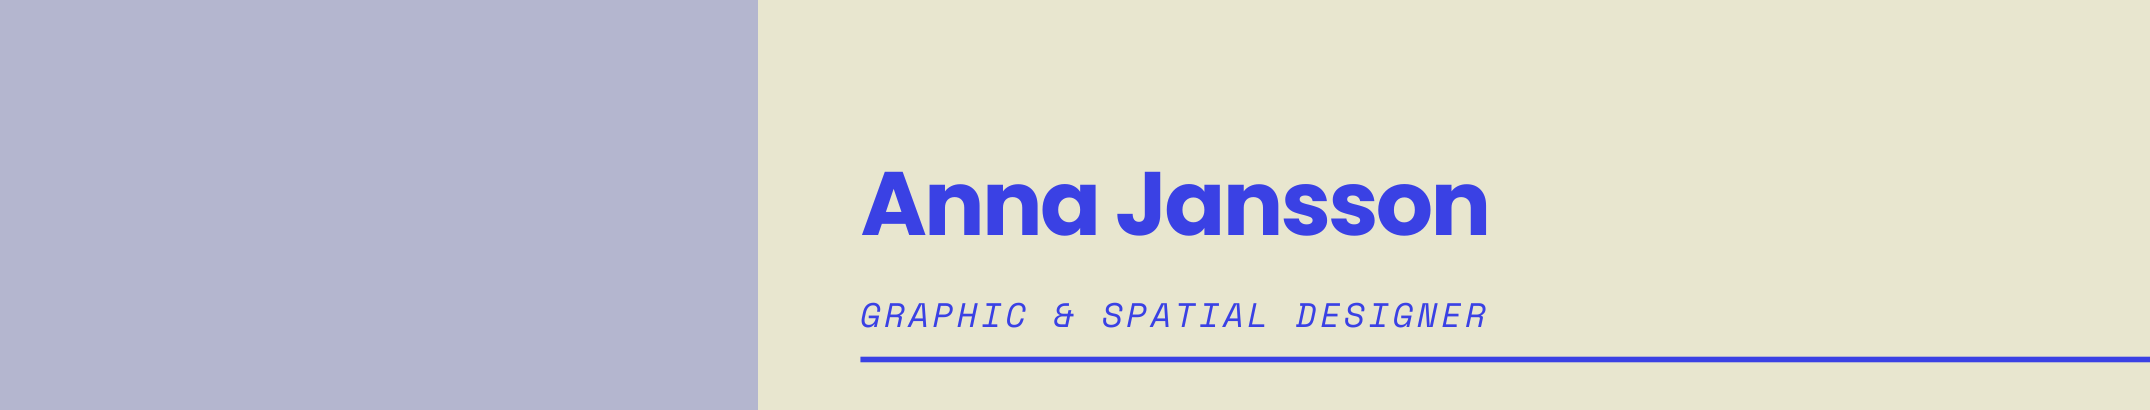 Anna Janssons profilbanner